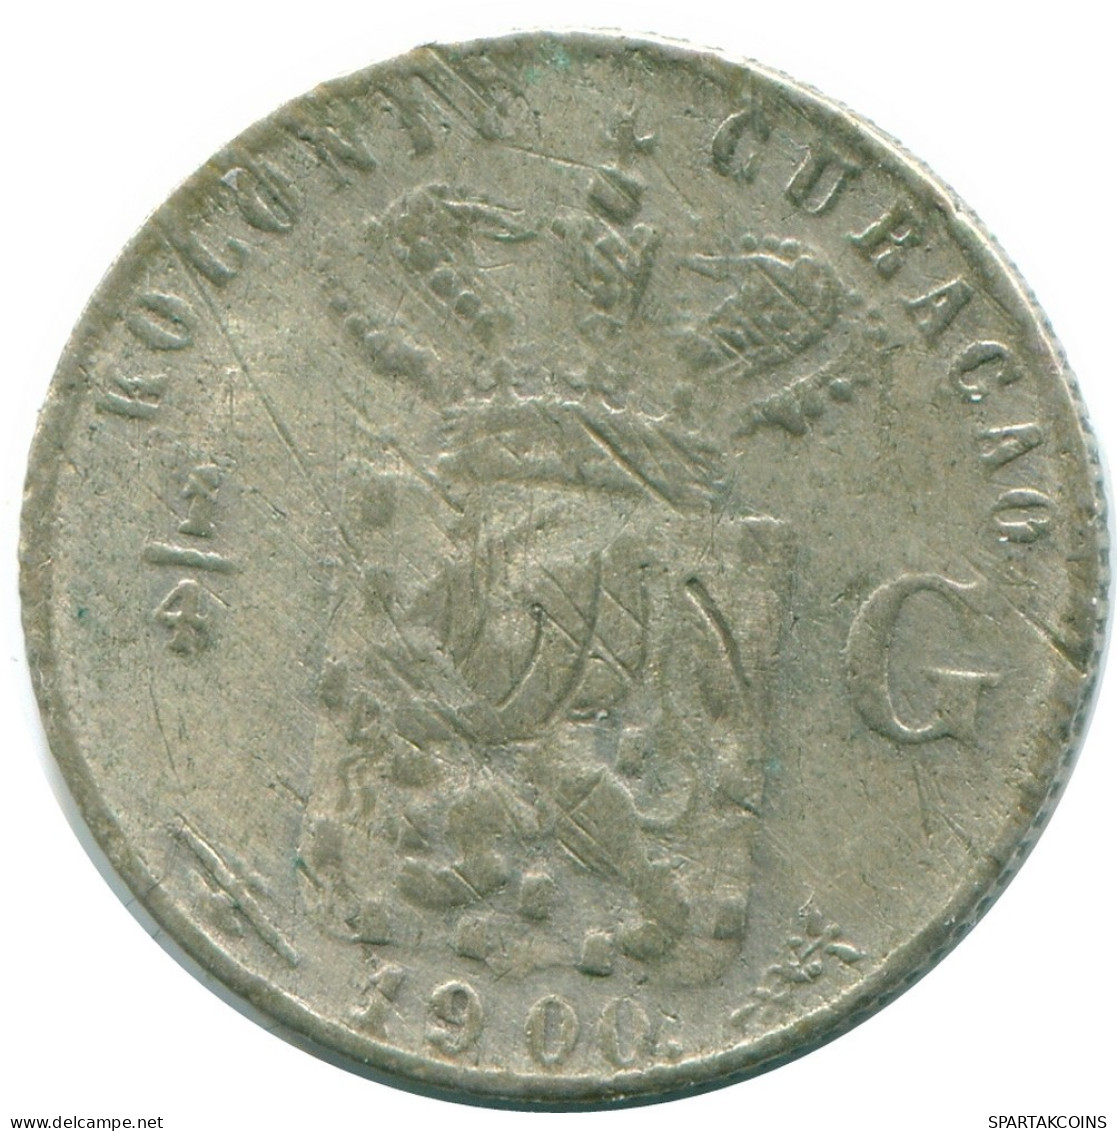 1/4 GULDEN 1900 CURACAO Netherlands SILVER Colonial Coin #NL10533.4.U.A - Curacao